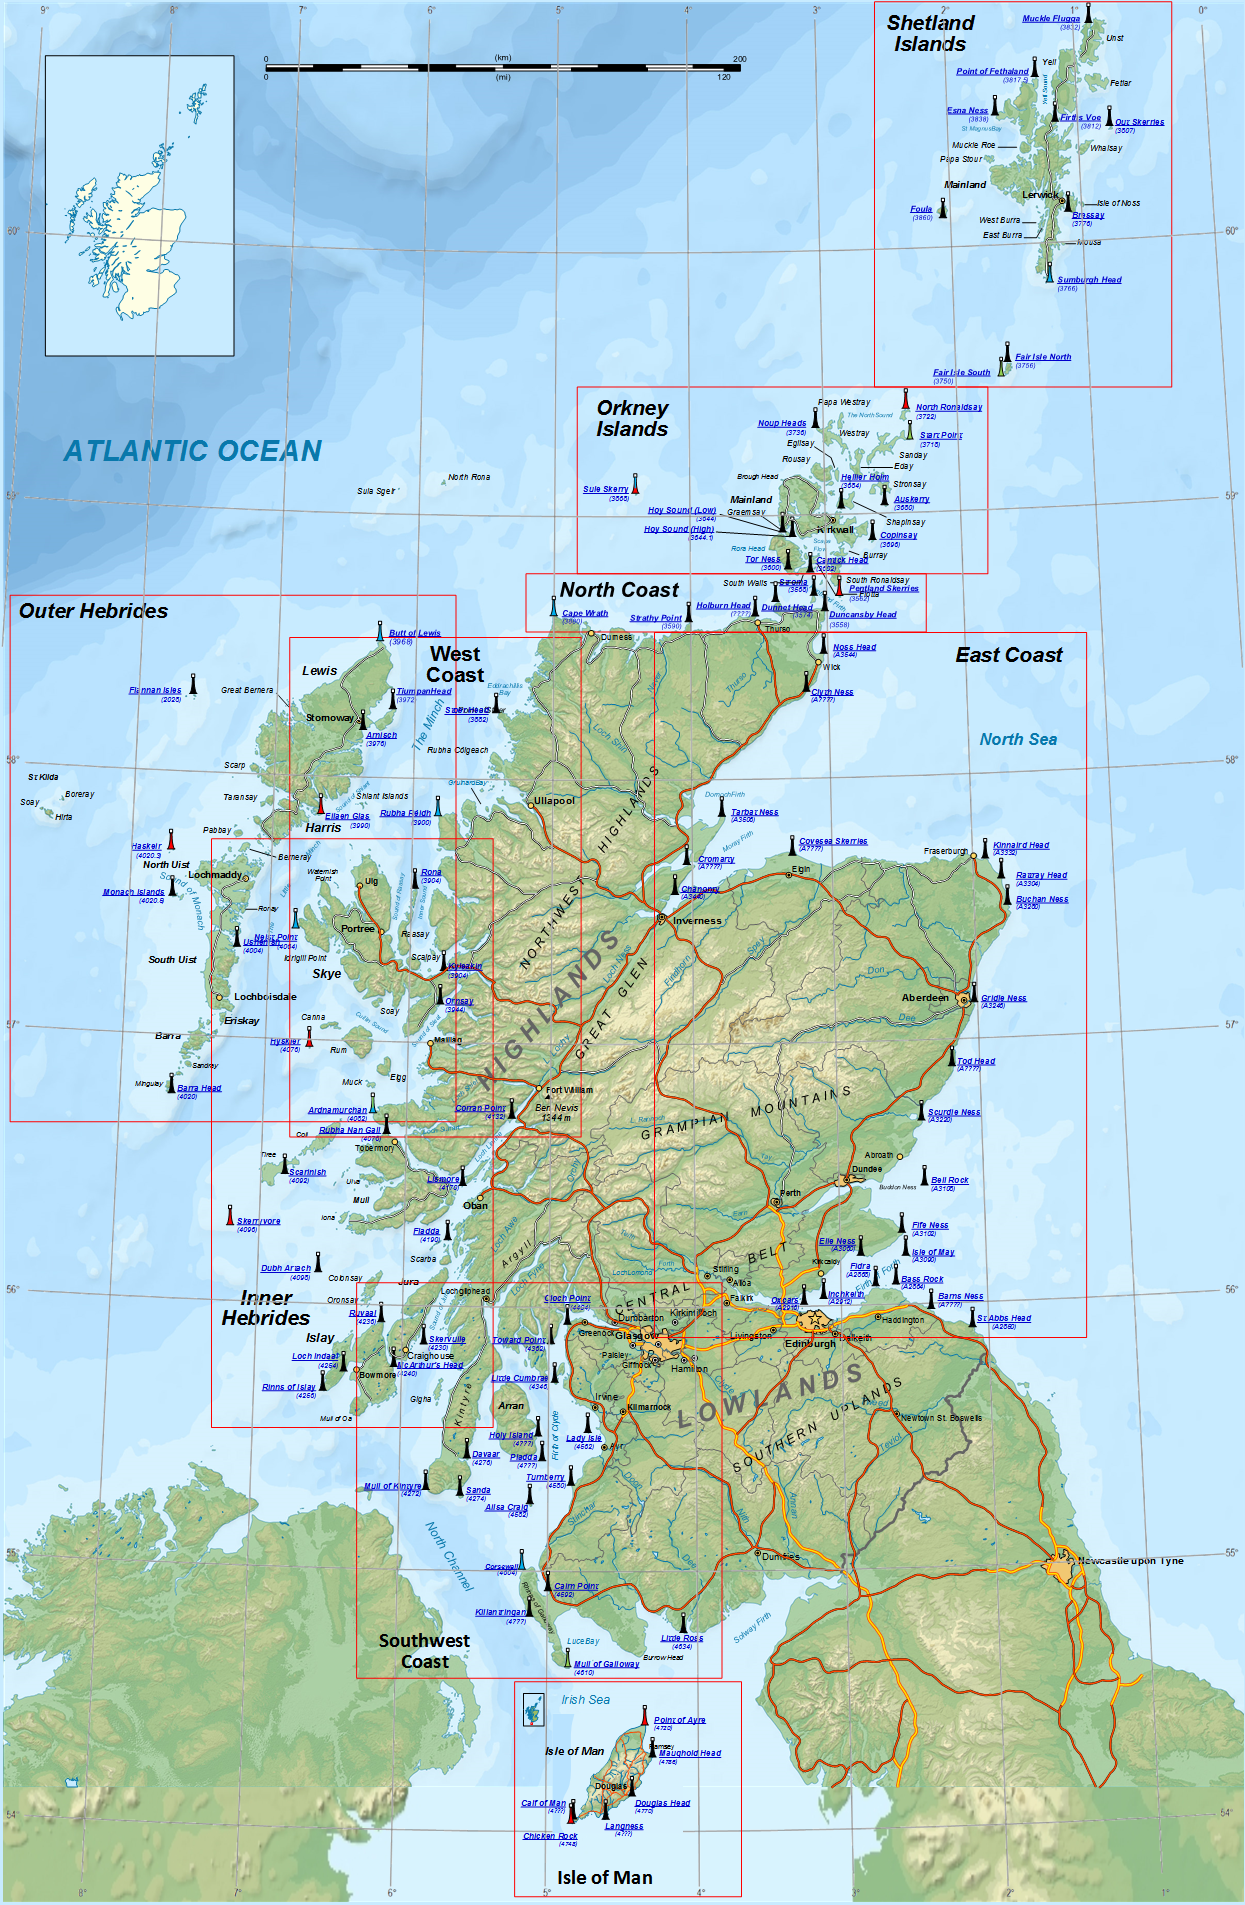 Lighthouse map of Scotland